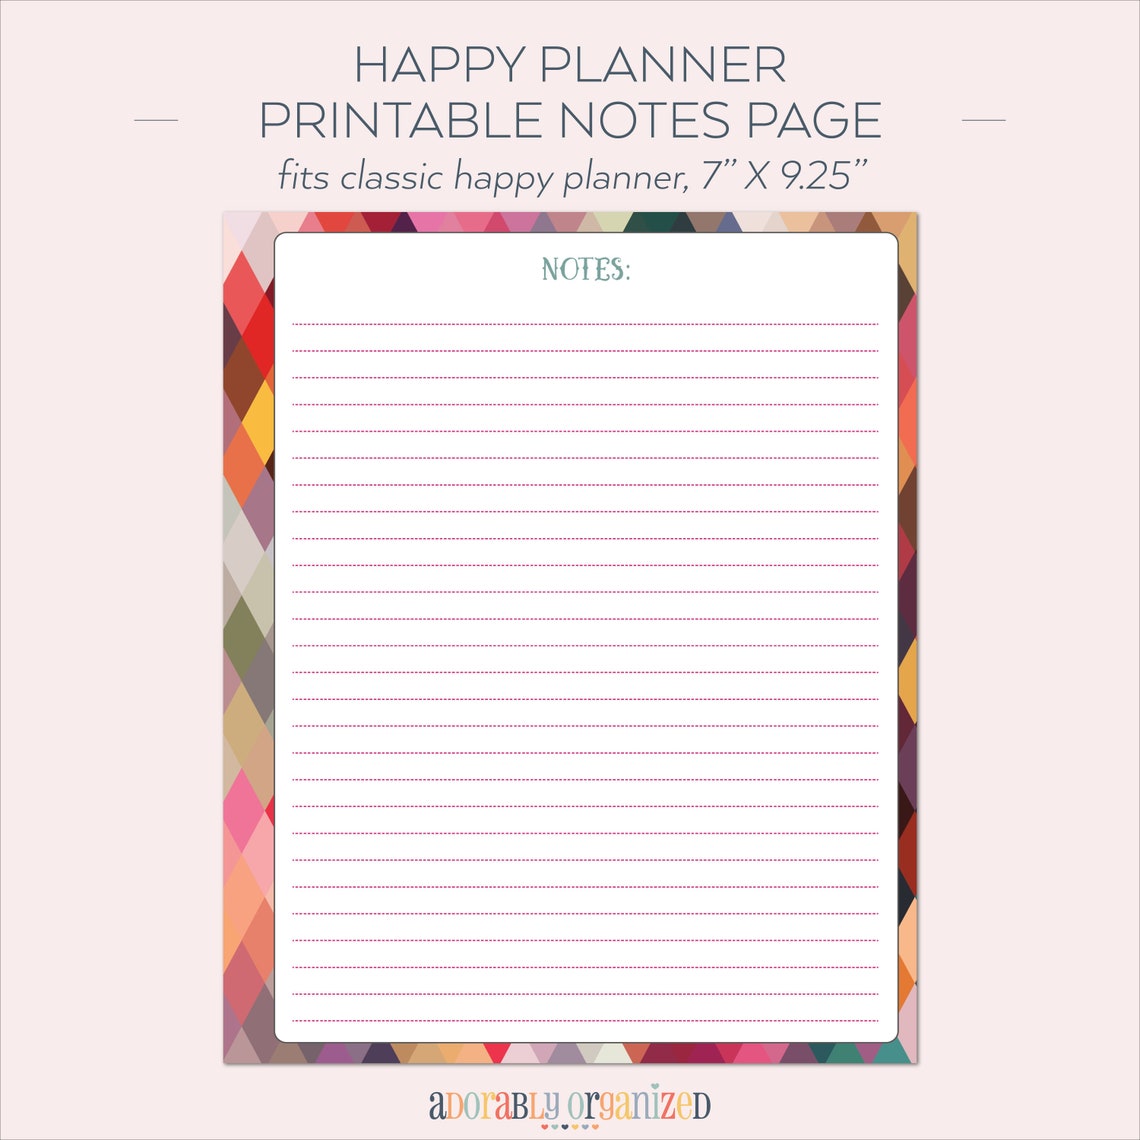 Plan note